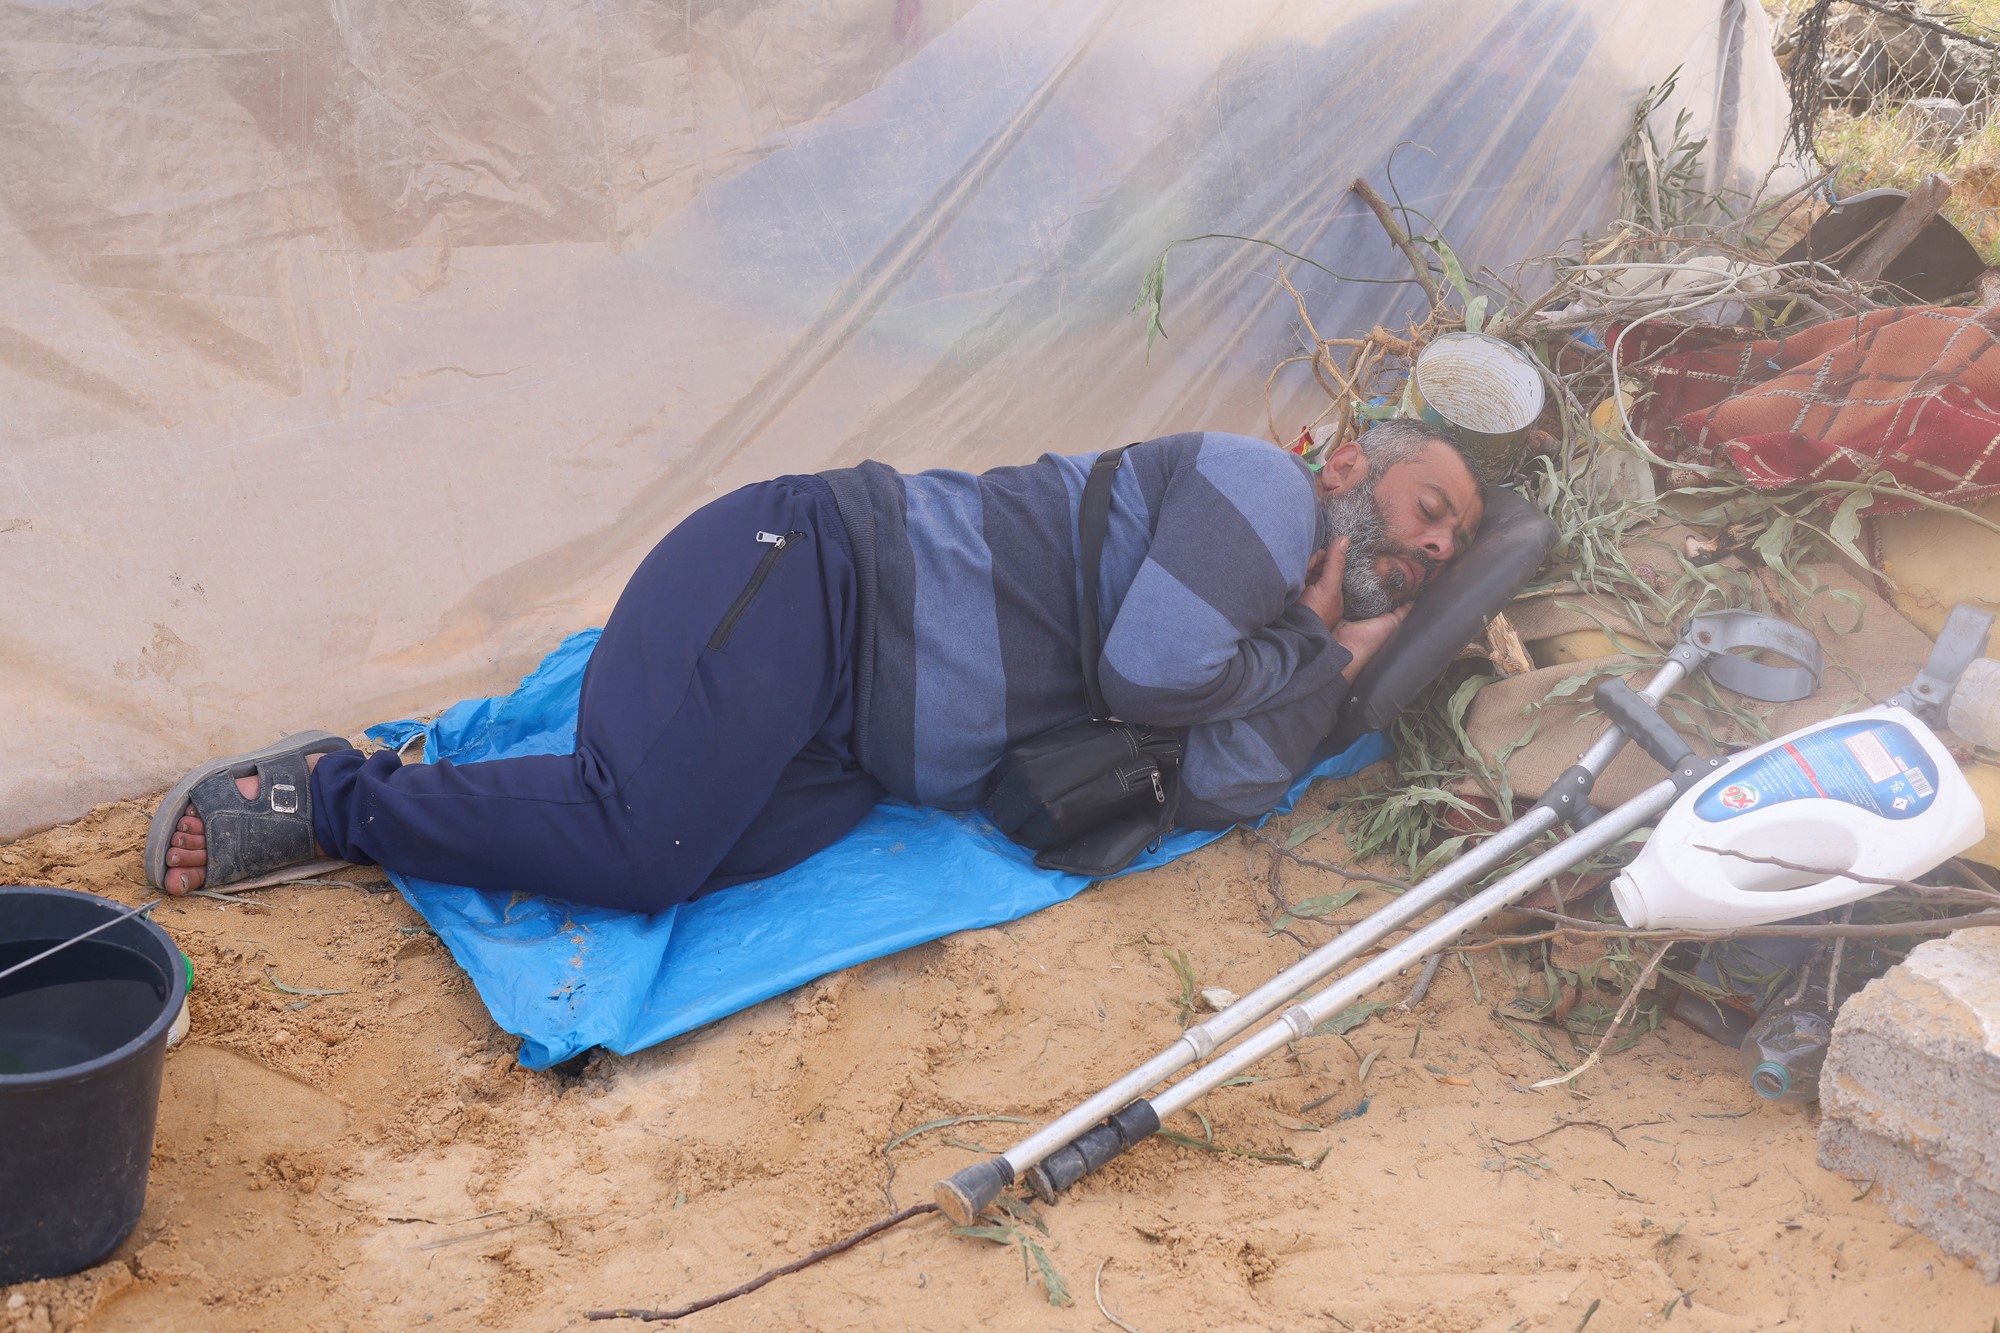 Man sleep on the ground covered by blue tarp